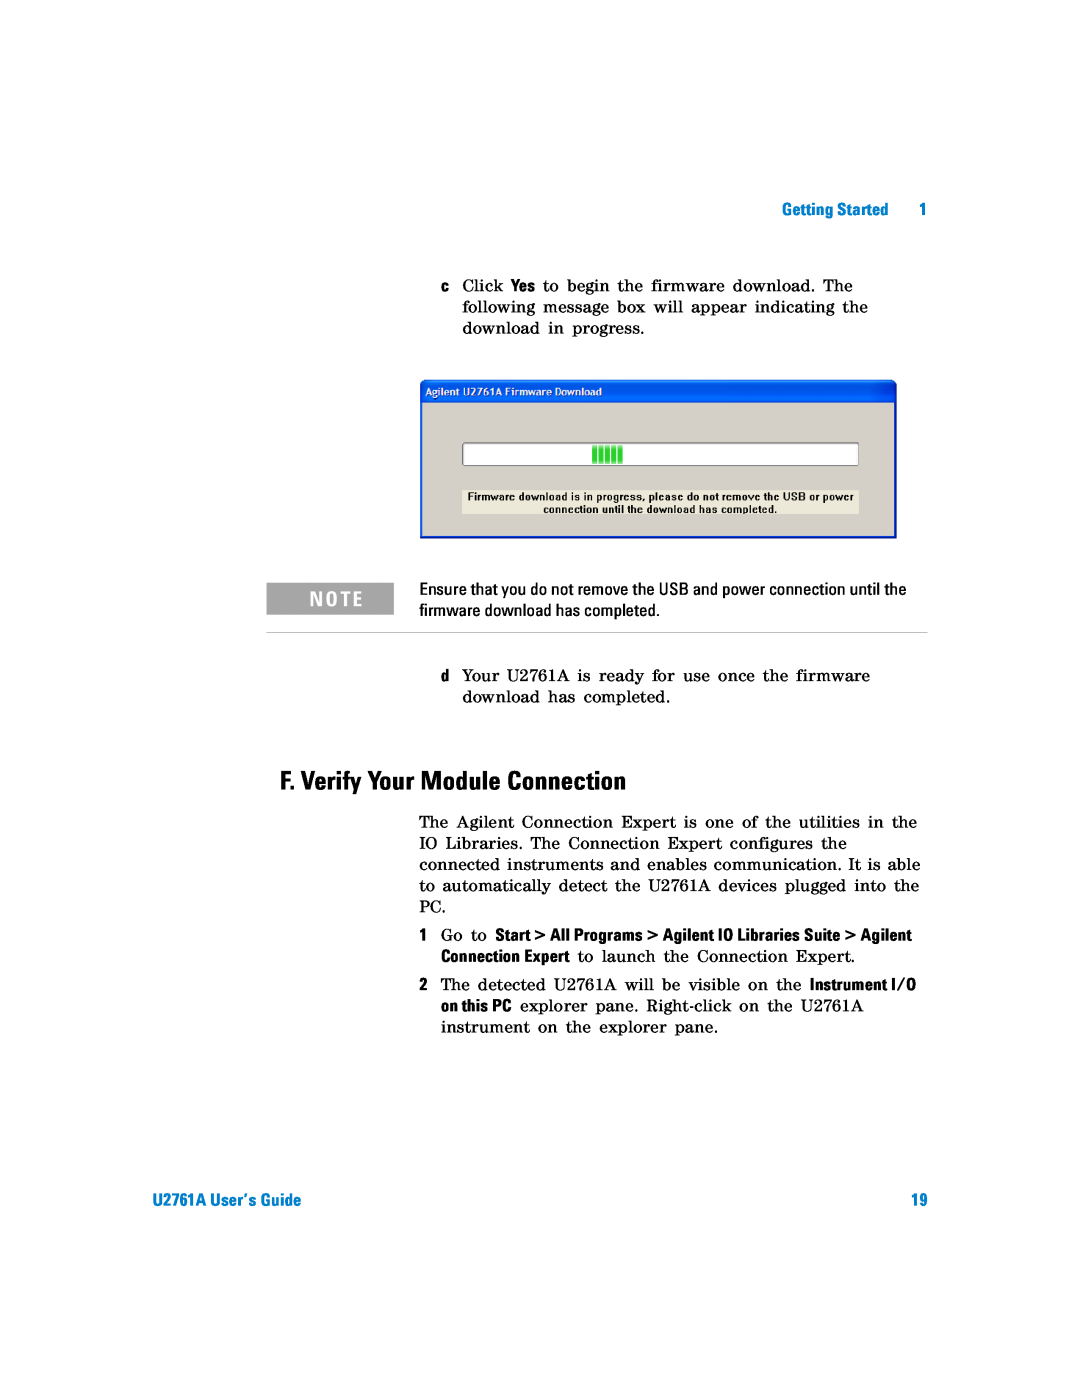 Agilent Technologies manual F. Verify Your Module Connection, N O Te, U2761A User’s Guide 